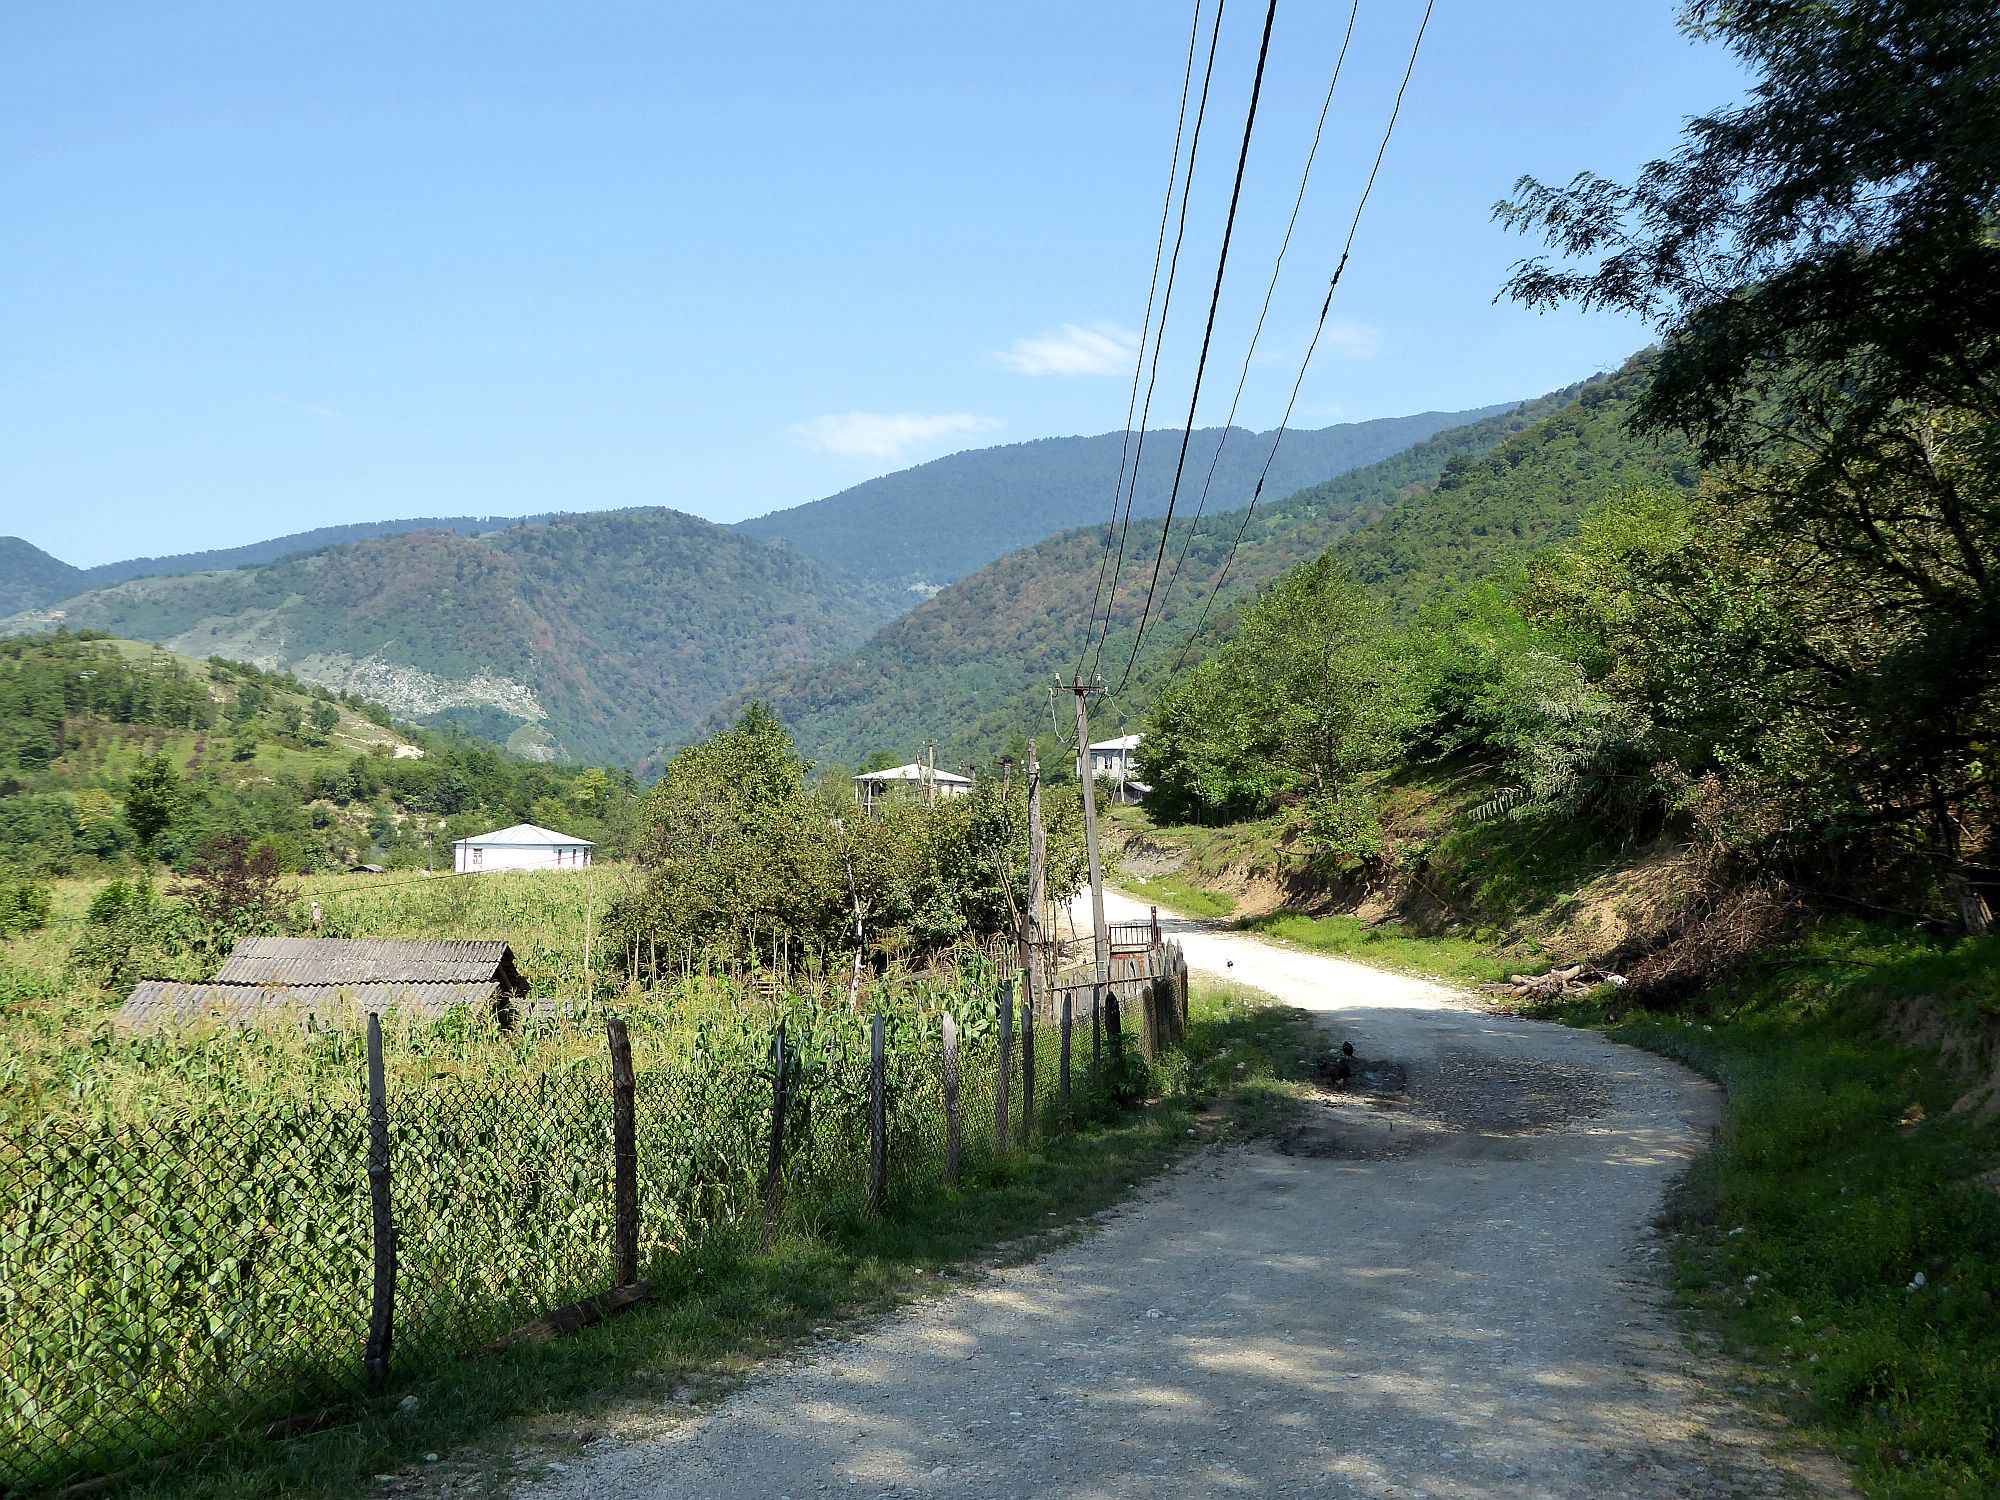 Trail starts in the Chkvaleri village